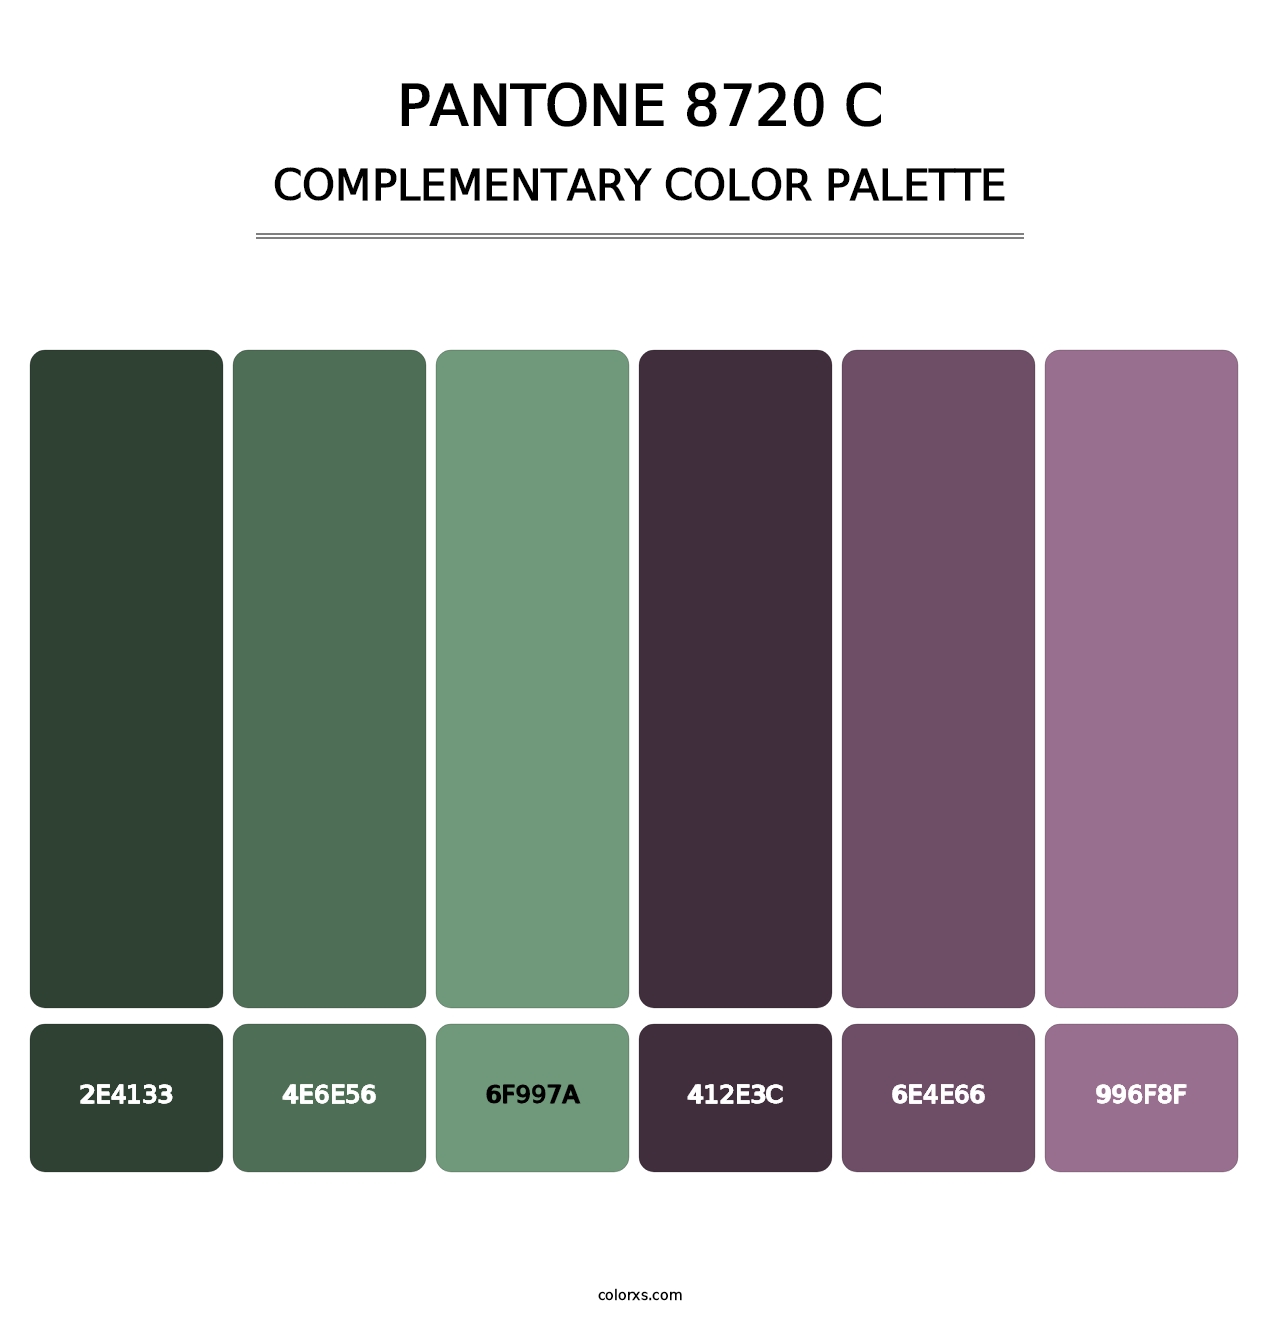 PANTONE 8720 C - Complementary Color Palette